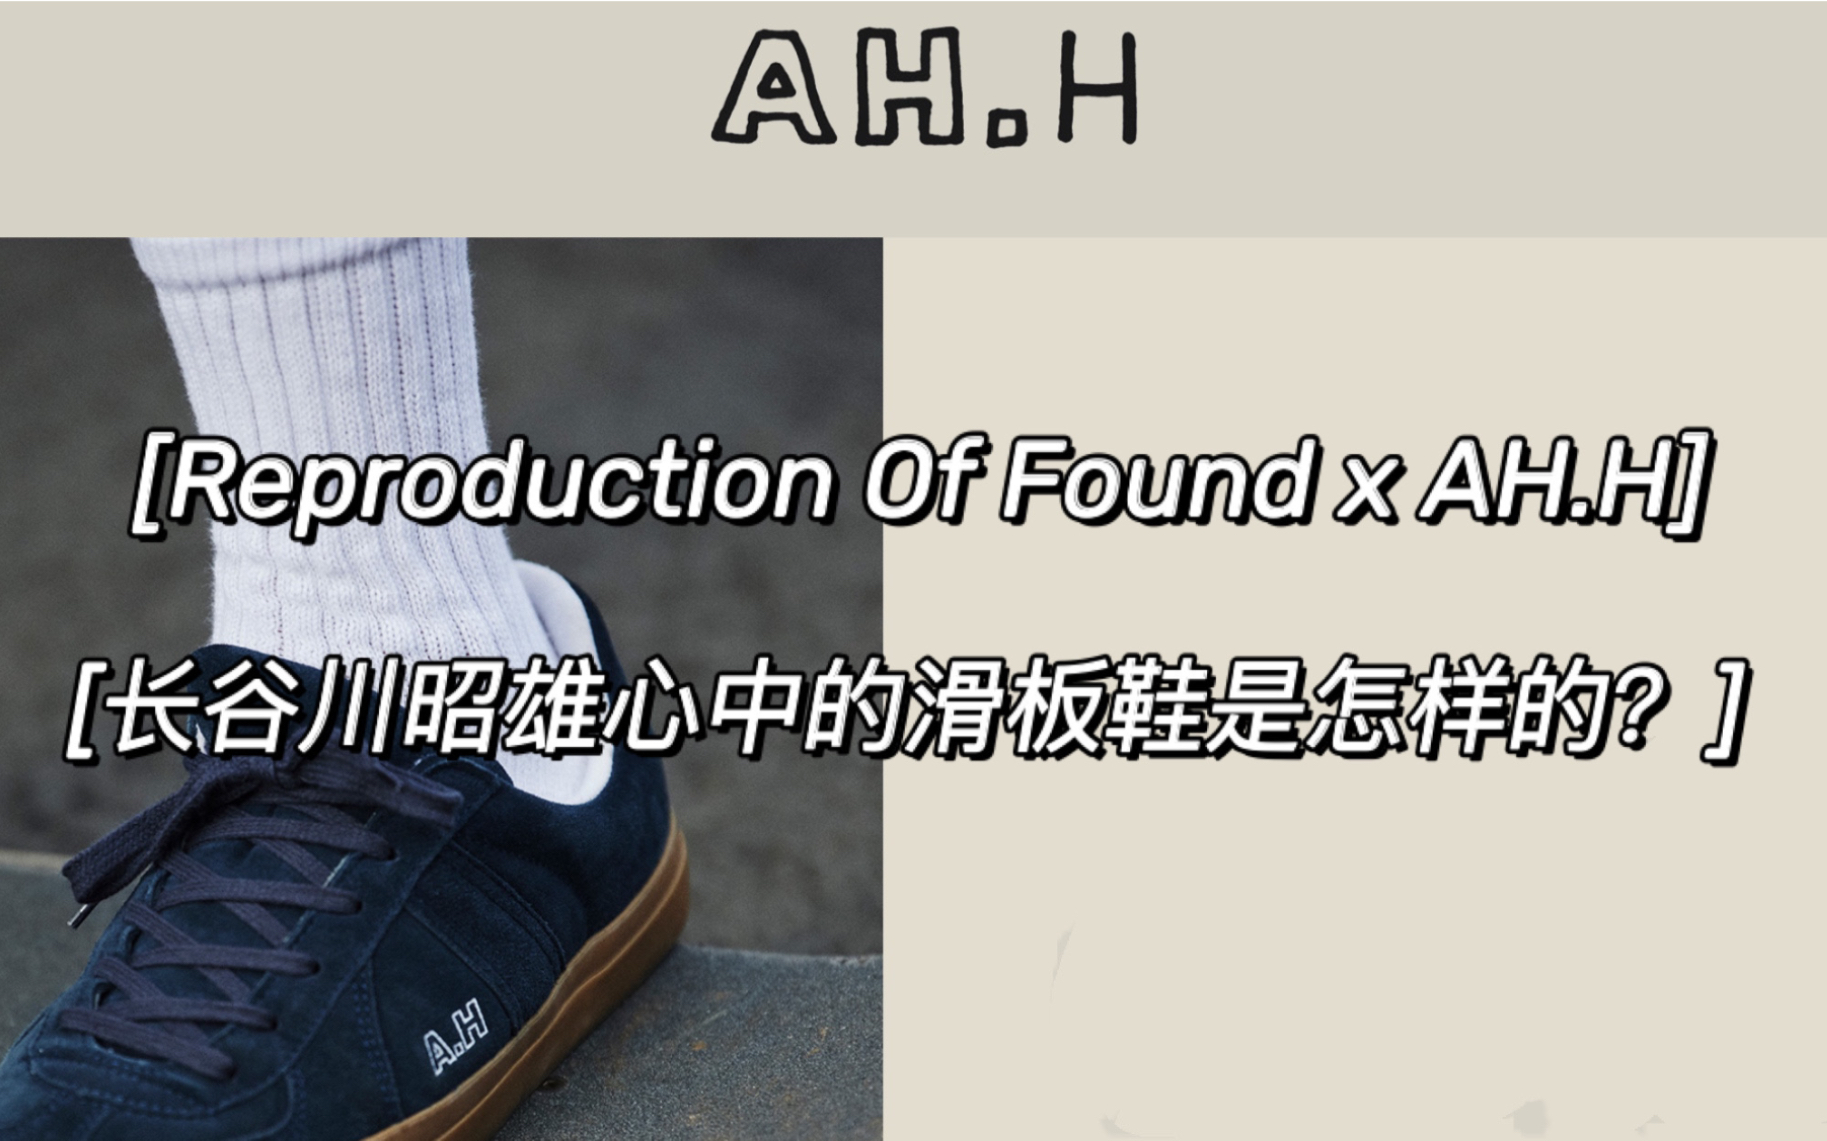 reproduction of found soushi 42 ah.h靴/シューズ - スニーカー